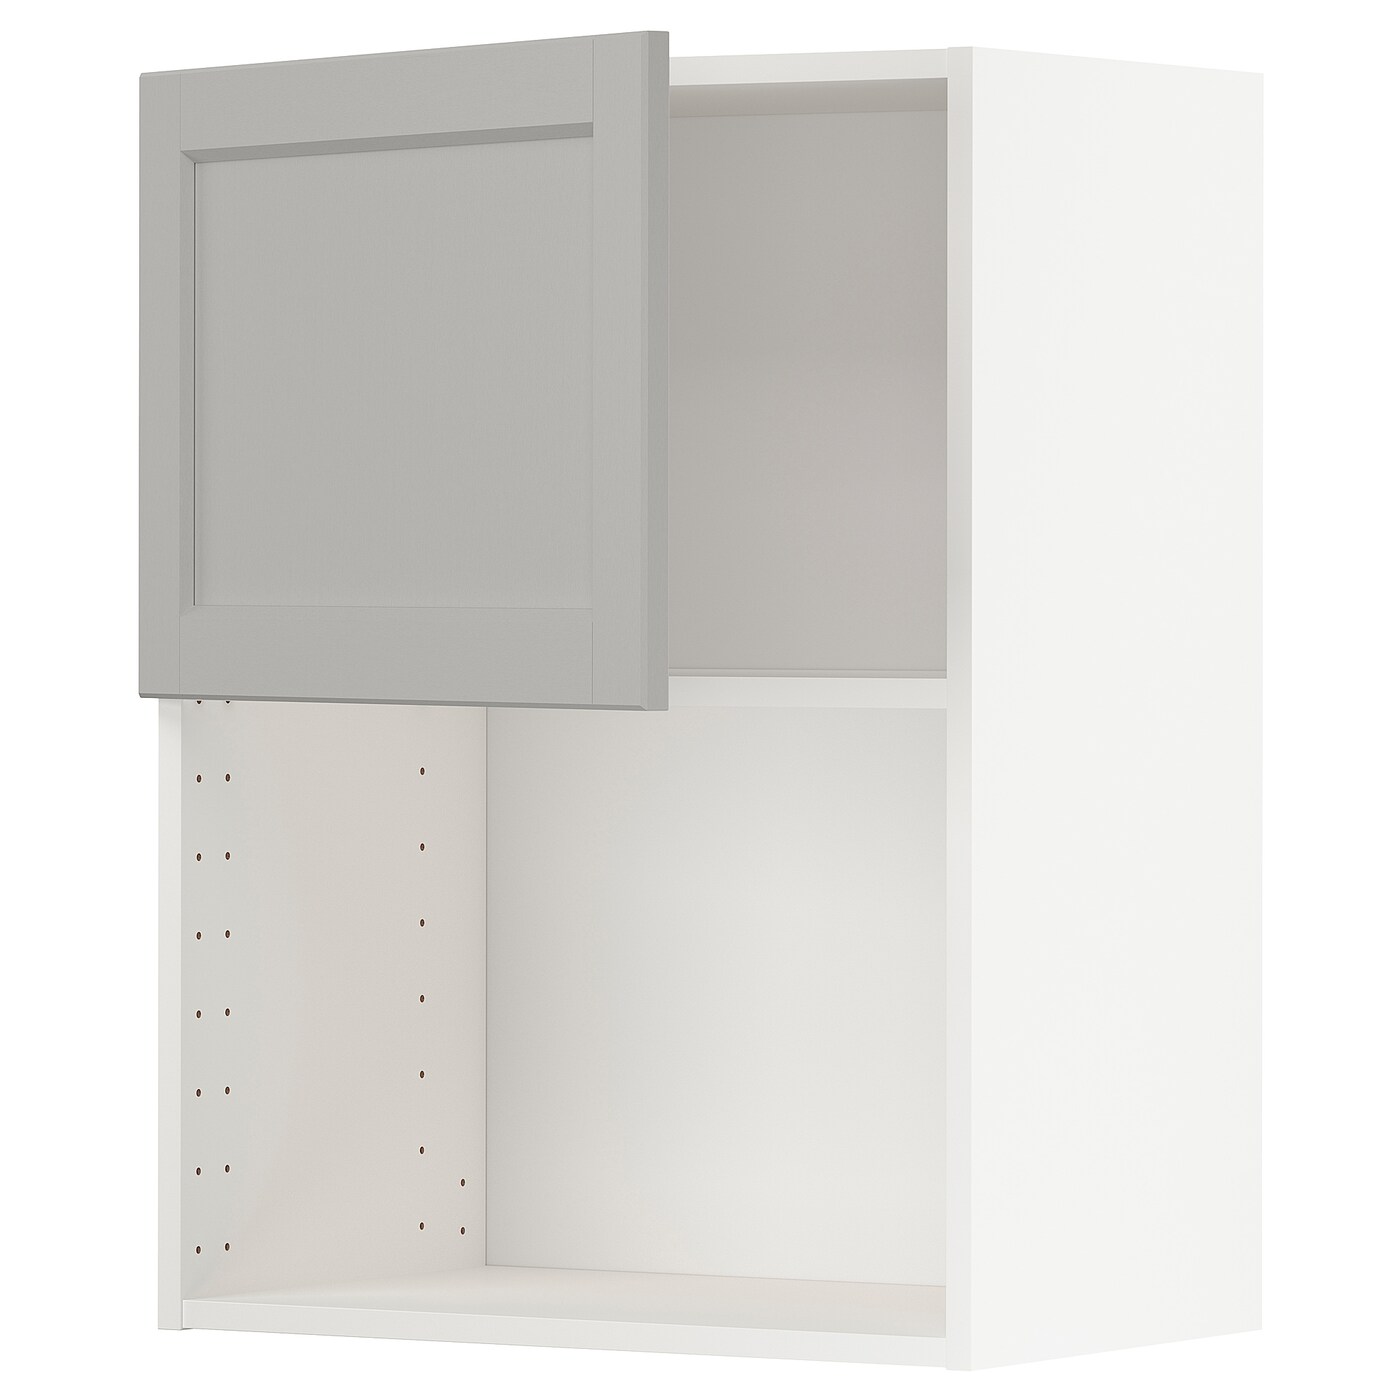 METOD Навесной шкаф - METOD IKEA/ МЕТОД ИКЕА, 80х60 см, белый/светло-серый